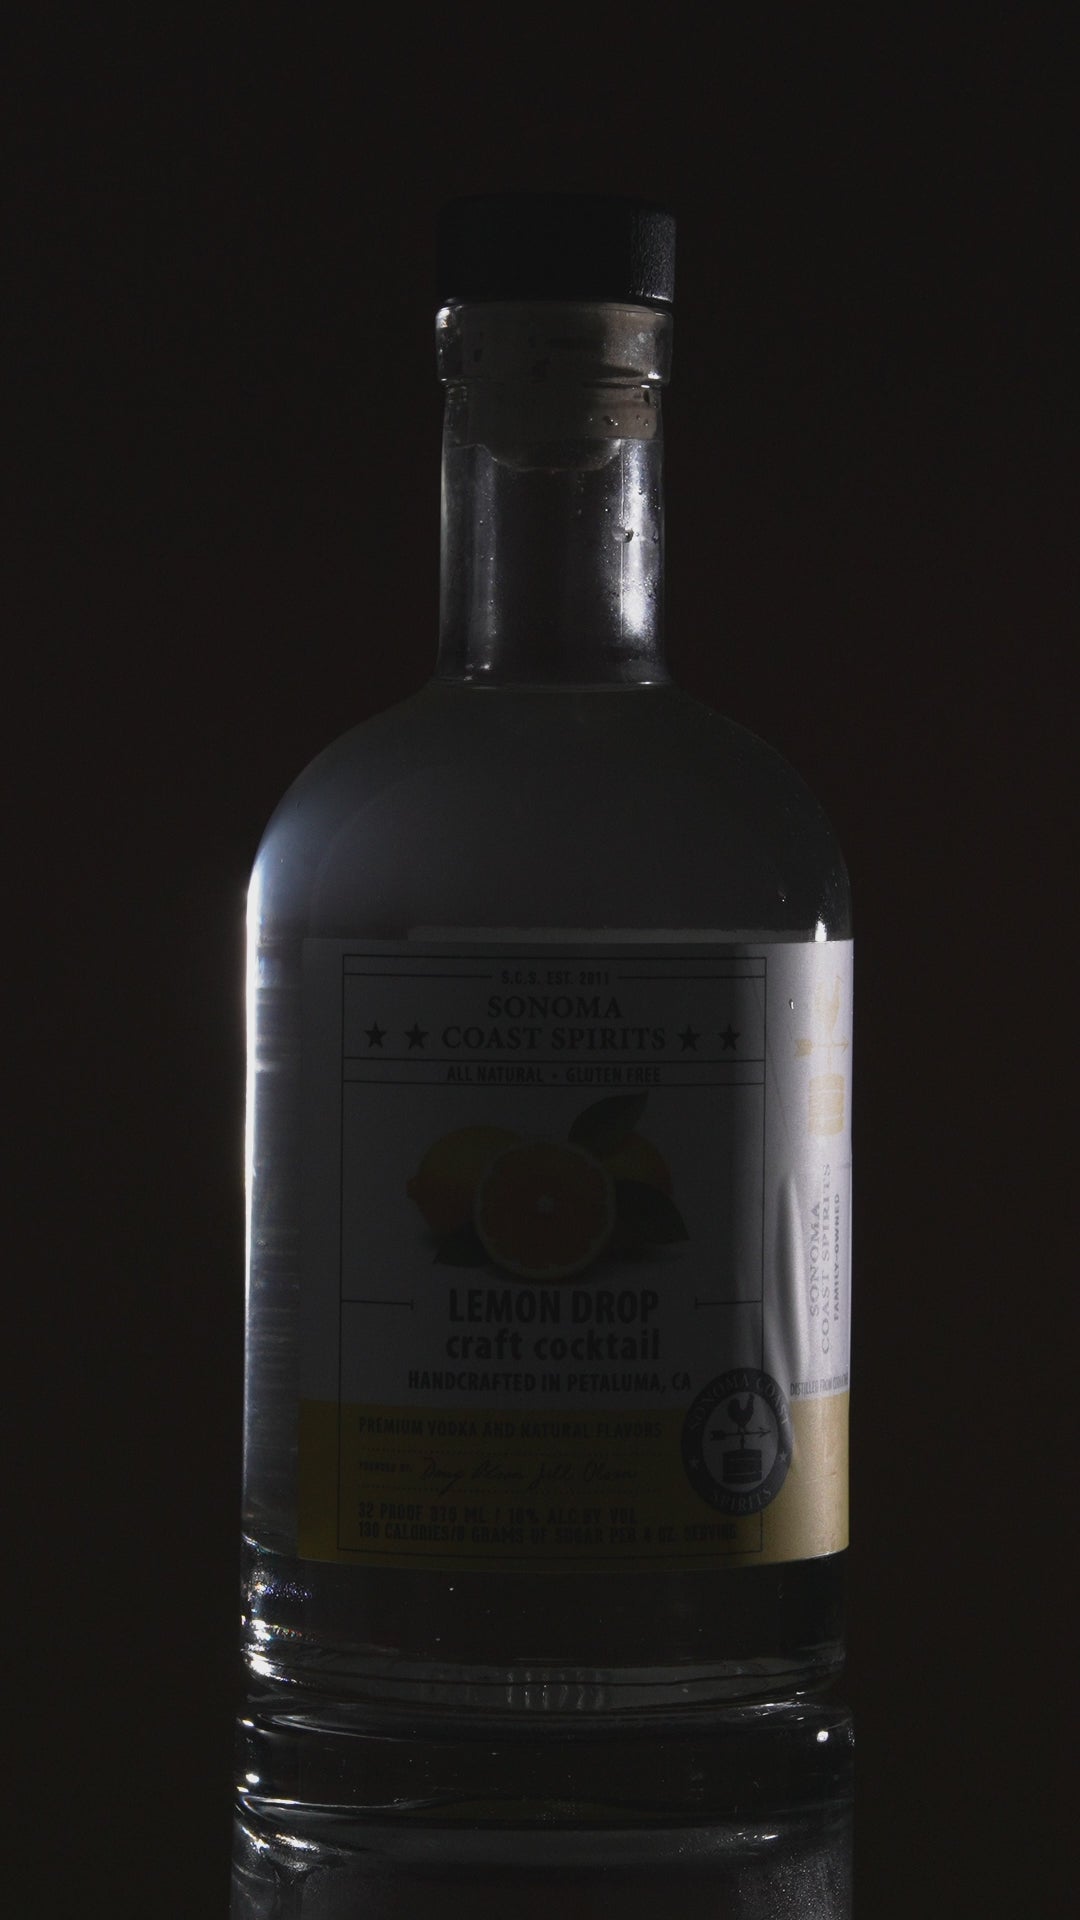 Lemon drop Craft Cocktail 375ml